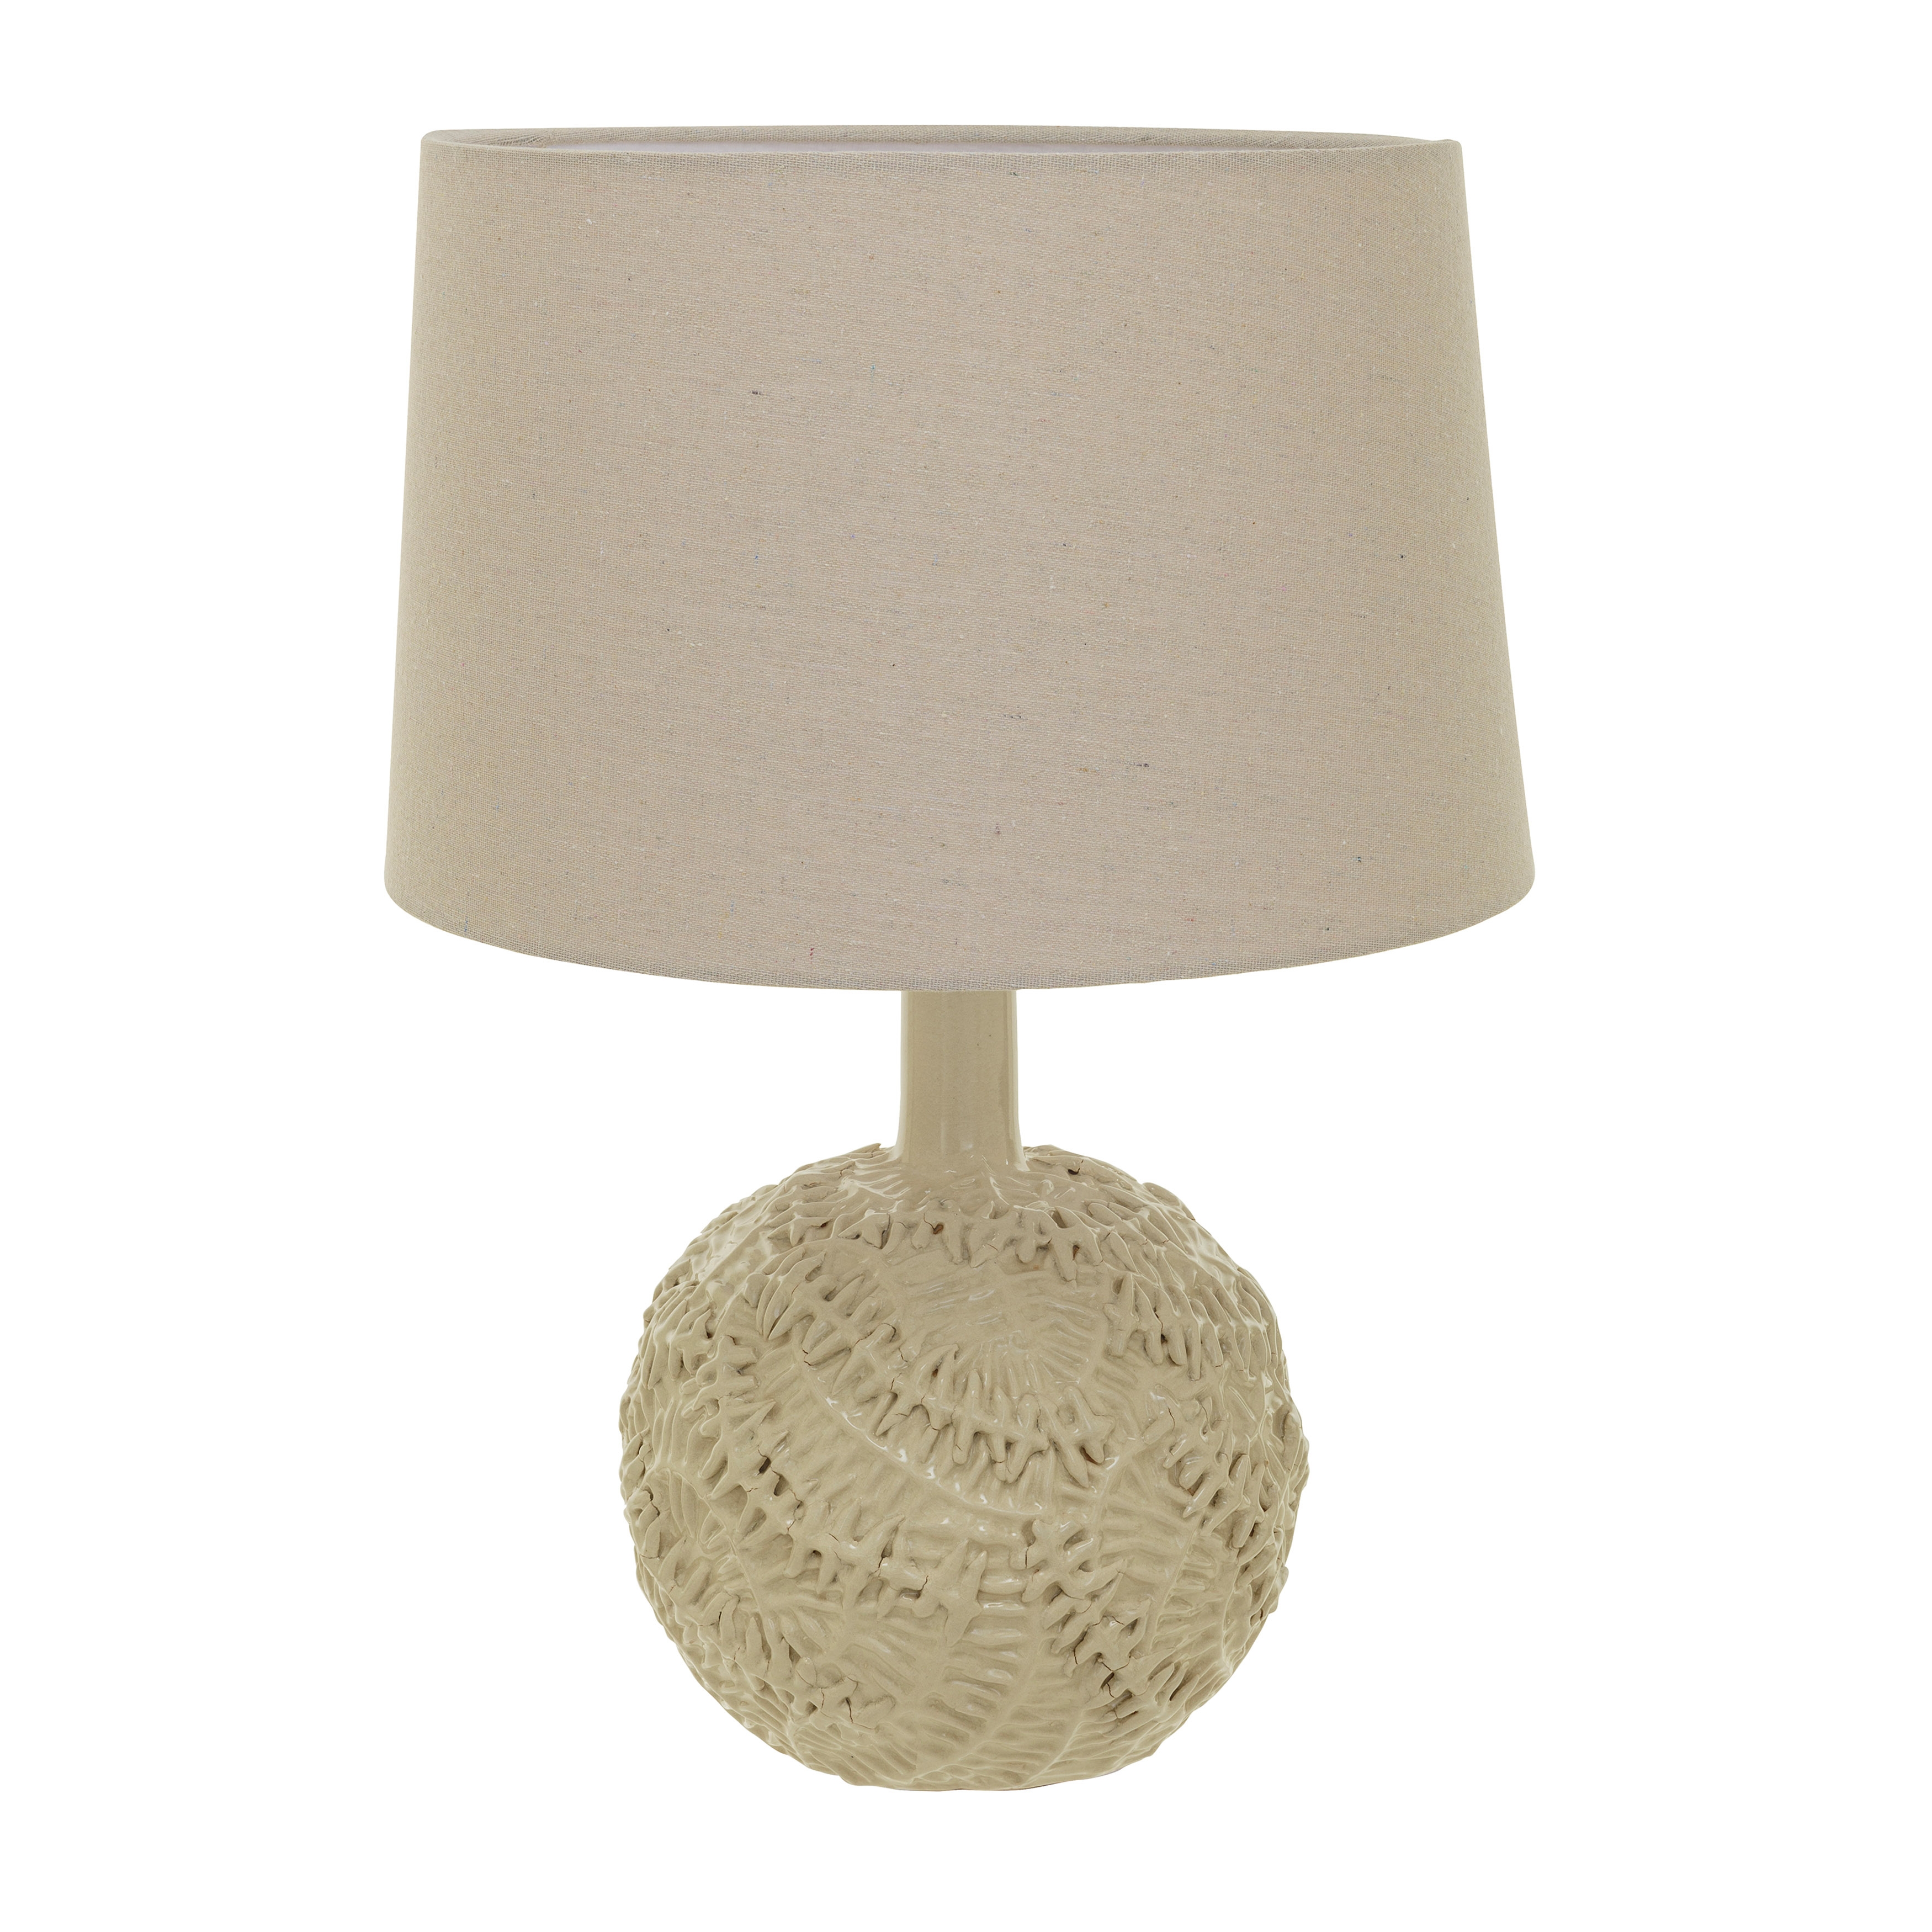 Handmade Textured Stoneware Table Lamp with Fabric Shade, Cream - Image 0